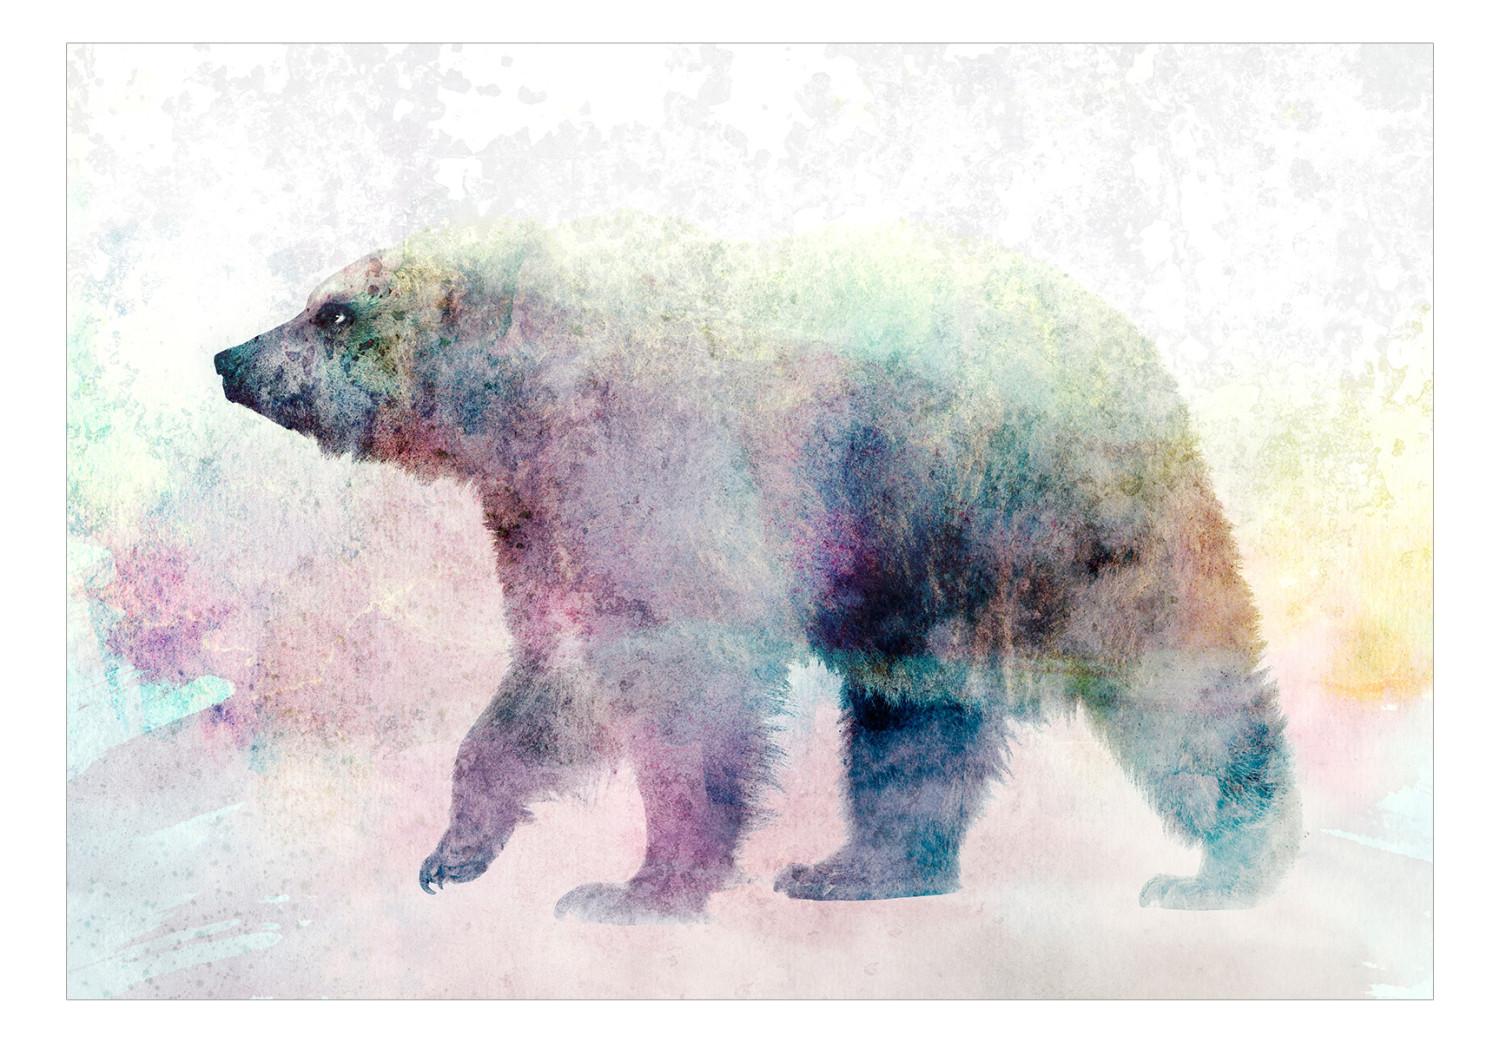 Fotomural a medida Animales invernales - motivo de oso con acento de color en fondo